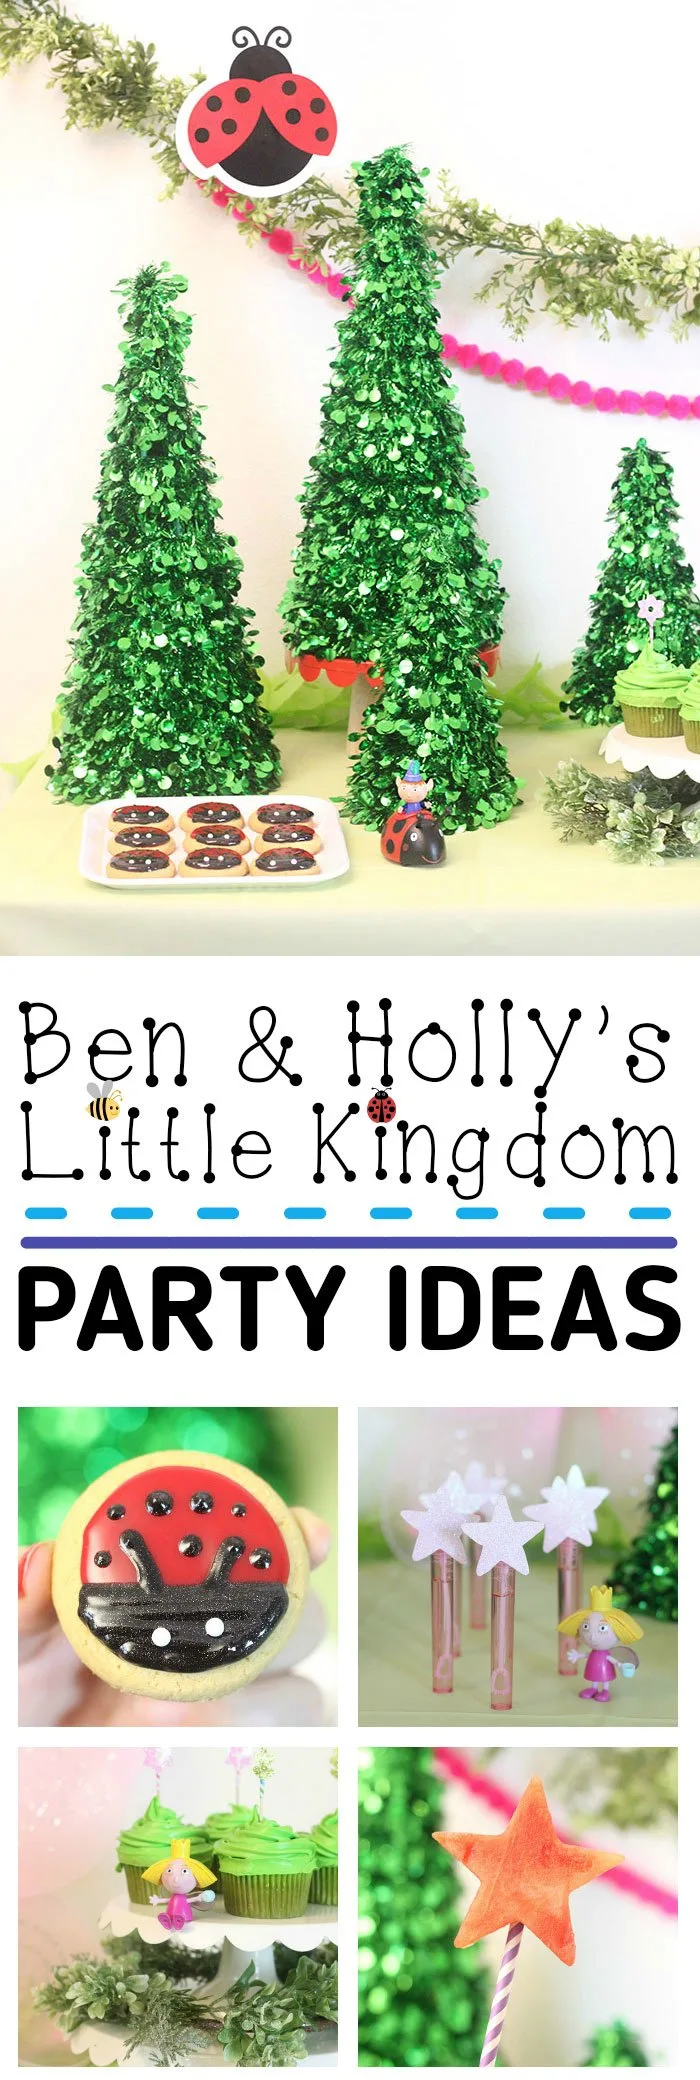 Ben & Holly's Little Kingdom Party Ideas